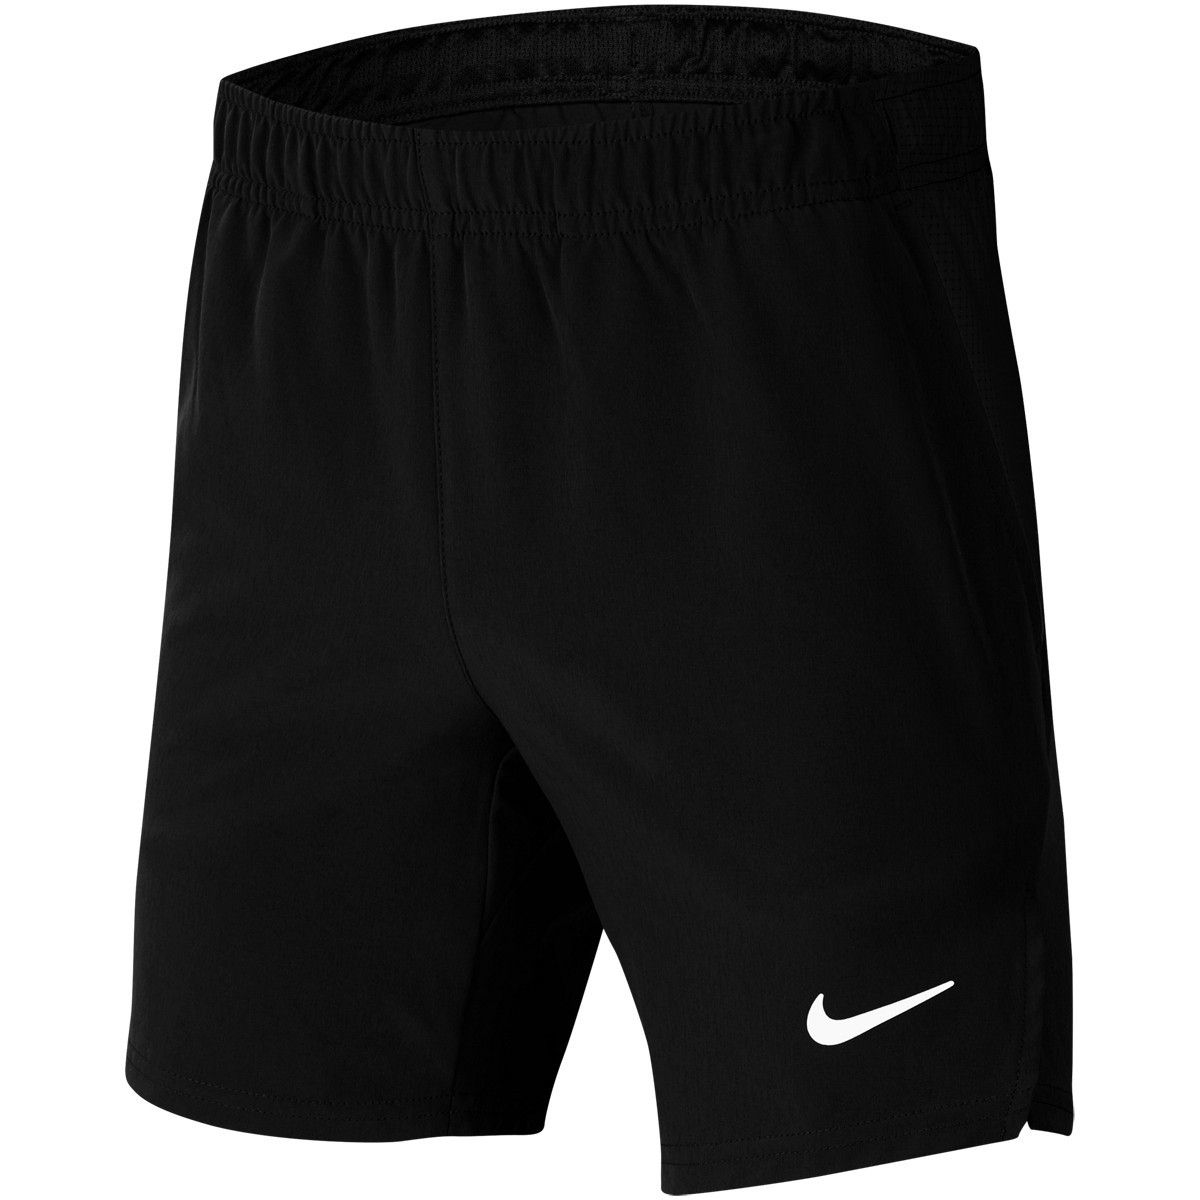 NikeCourt Flex Ace Boy's Tennis Shorts CI9409-010